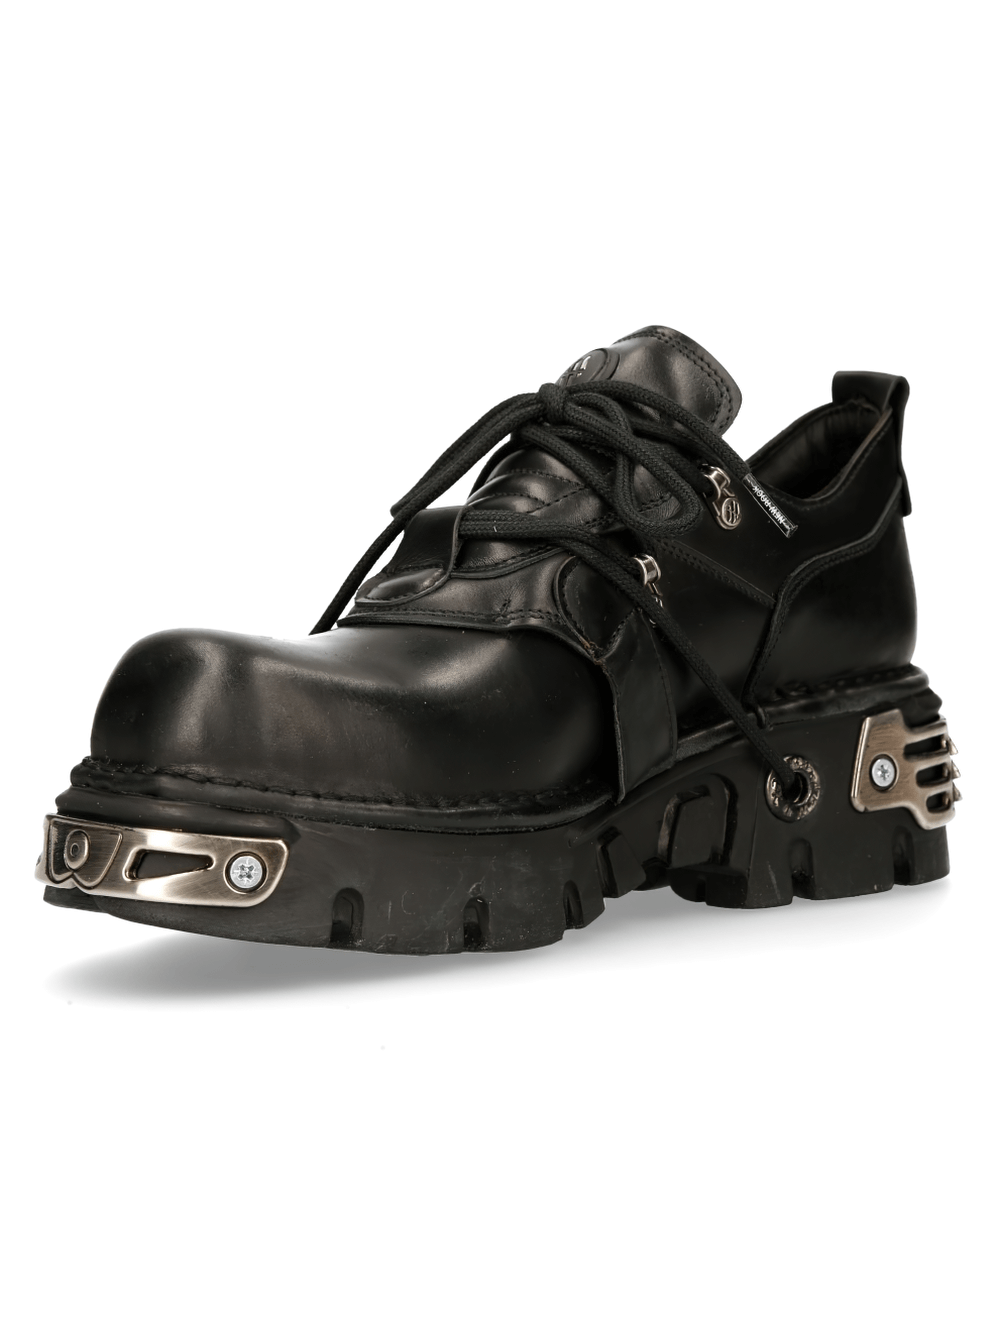 NEW ROCK Black Gothic Metal Buckle Shoes Unisex